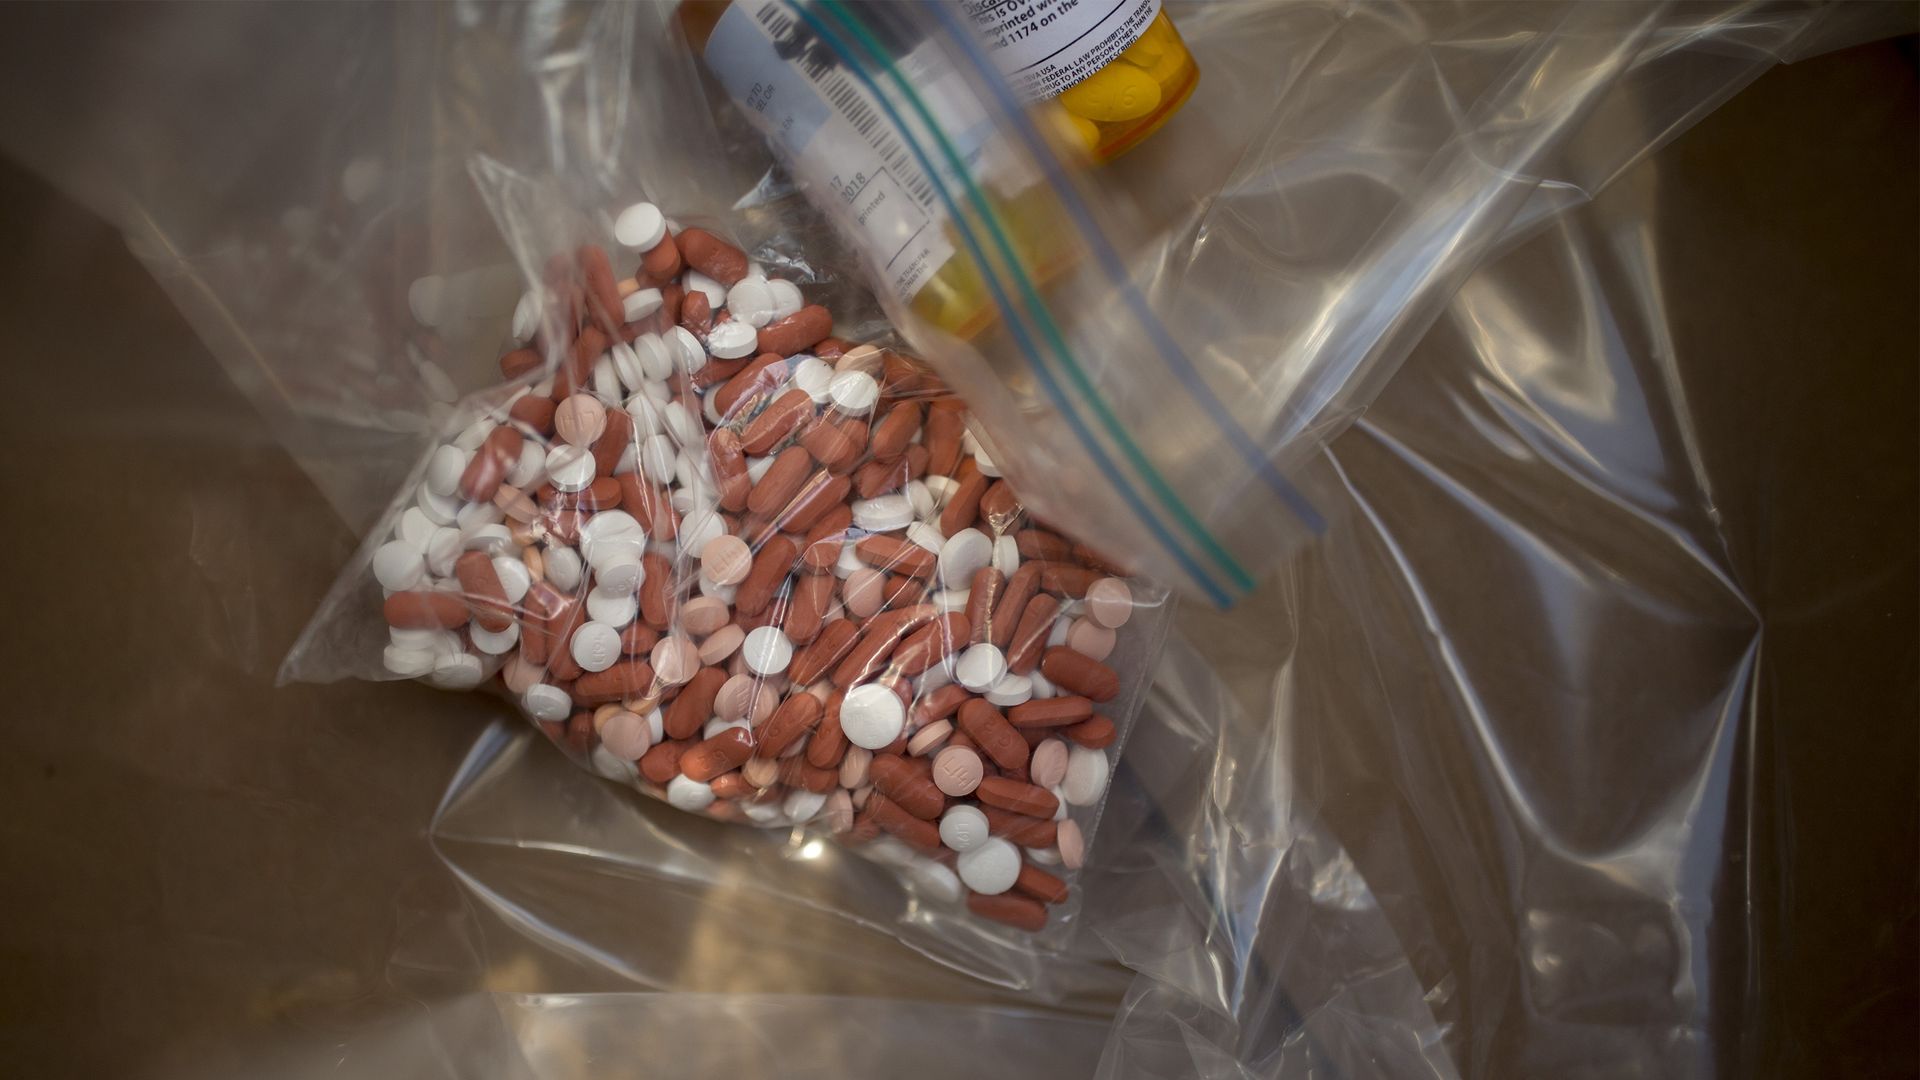 Prescription pills and bottles in plastic baggies.